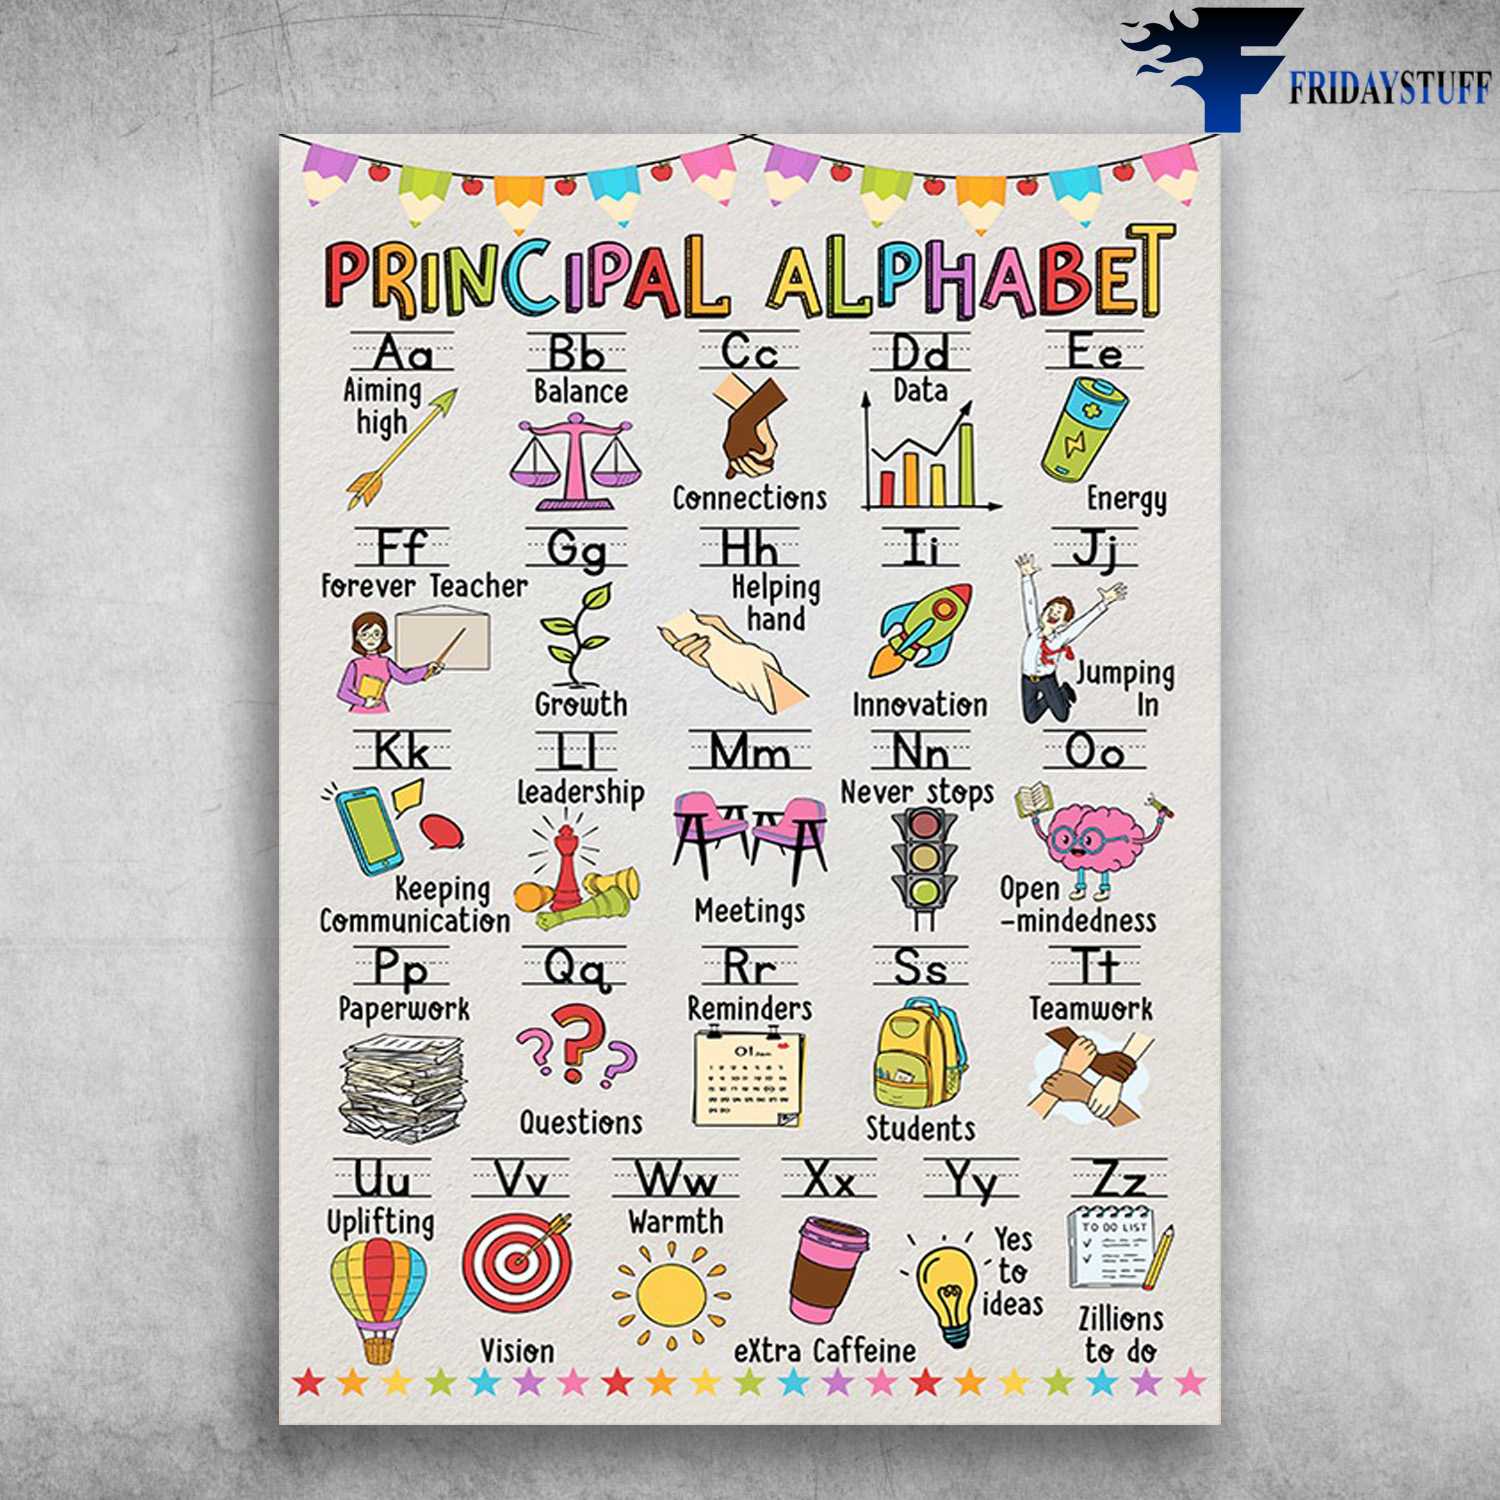 Back To School, Principal Alphabet - Aiming High, Balance, Connections, Data, Energy, Forever Teacher, Growth